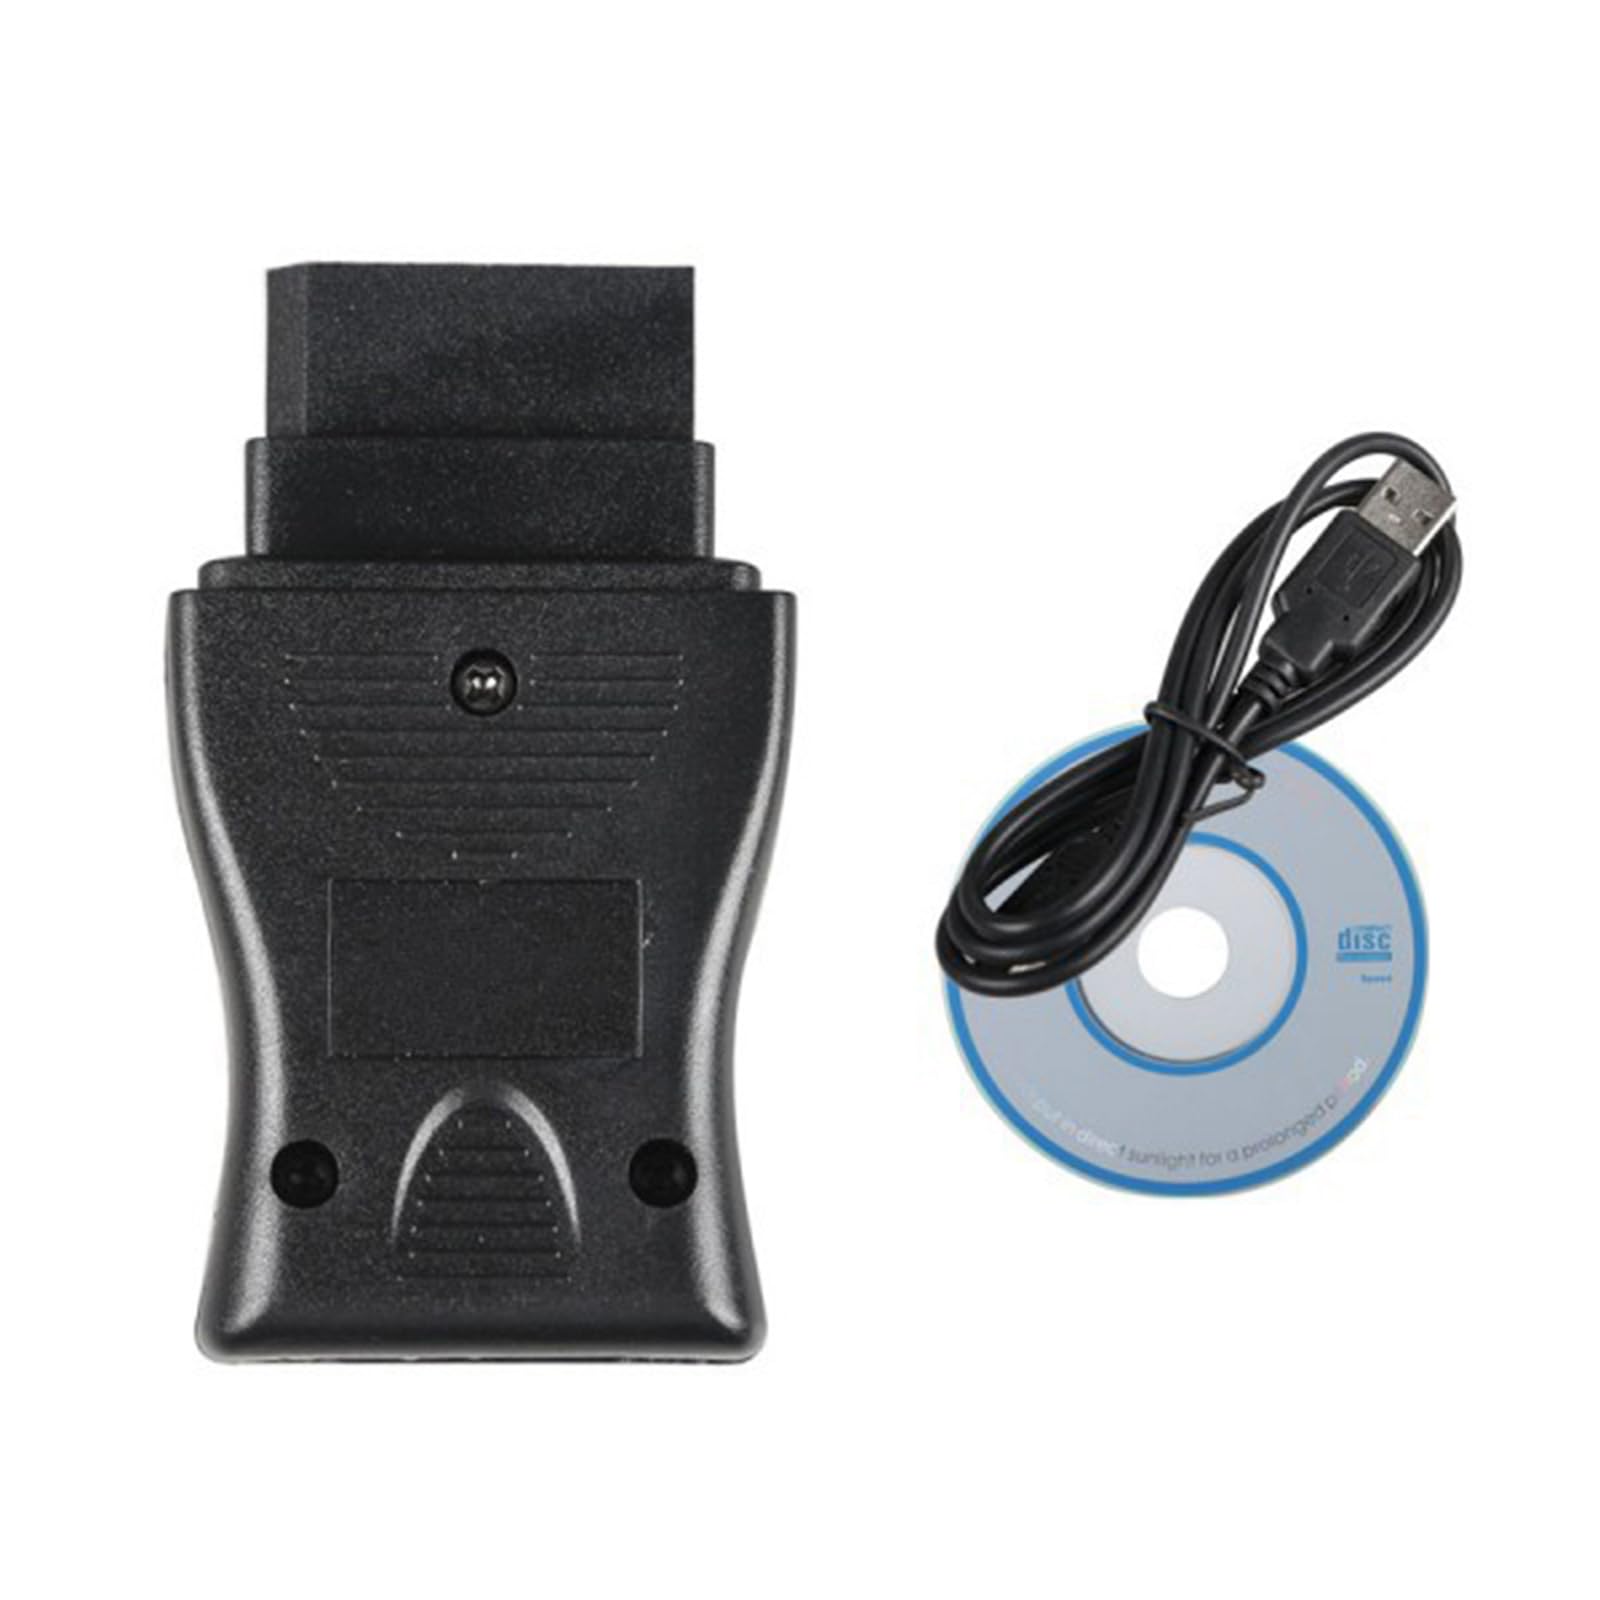 Schnittstelle 14-poliger USB Auto OBD Codeleser Universal Diagnosescanner Anschlussadapter Fahrzeugkompatibel Für Consult Car Diagnostic Adapter von KLOVA